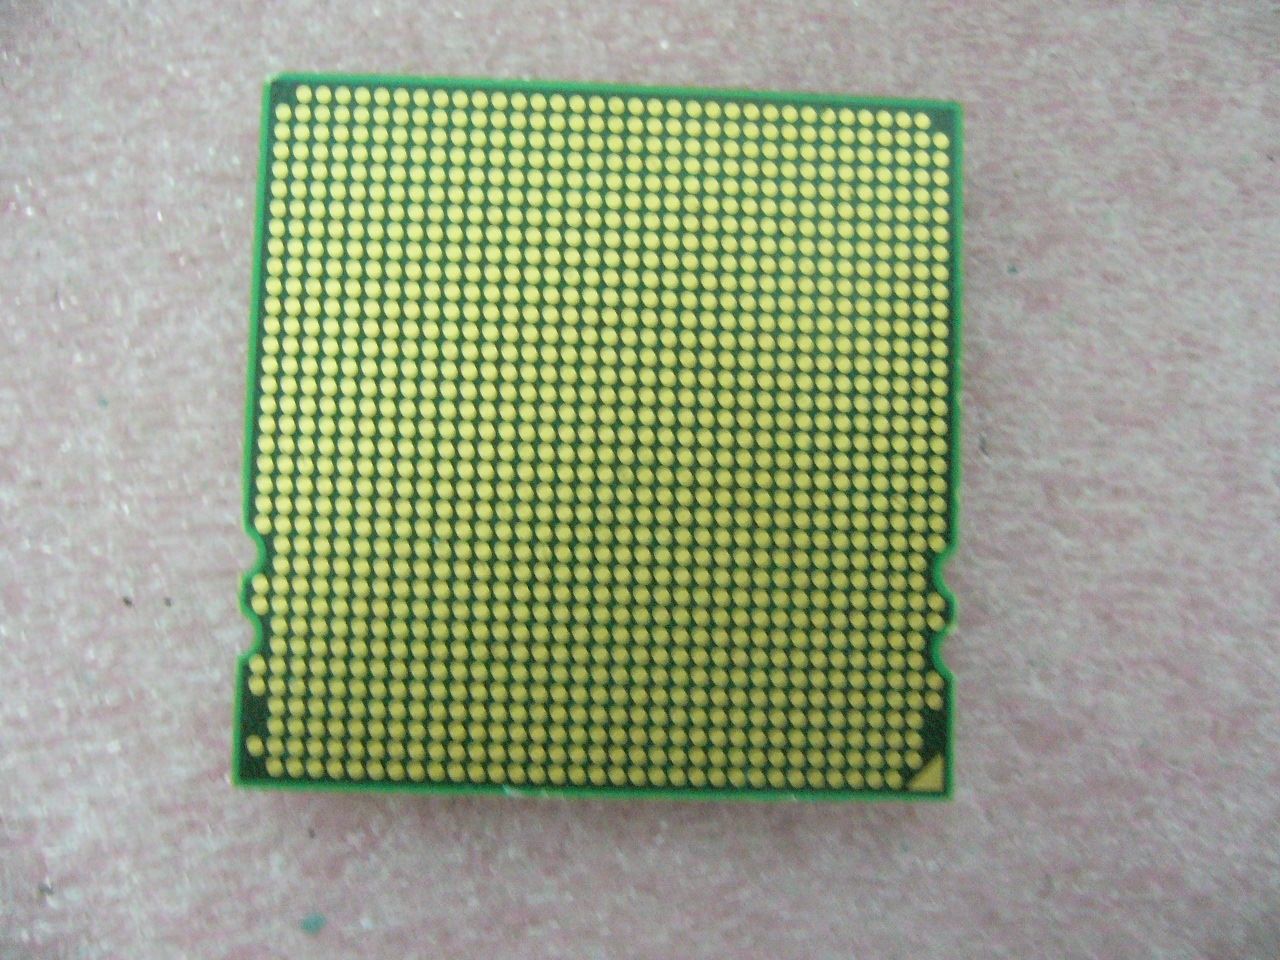 QTY 1x AMD Opteron 2347 HE 1.9 GHz Quad-Core (OS2347PAL4BGH) CPU Socket F 1207 - Click Image to Close